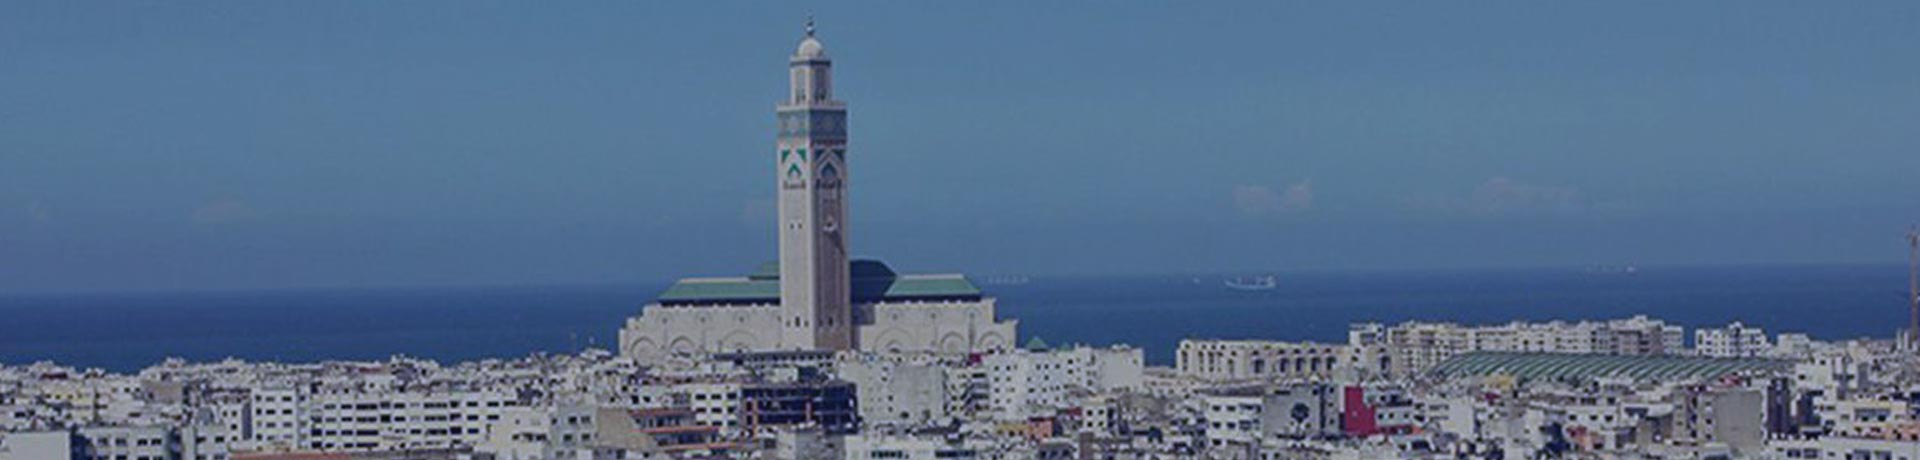 Vista di Casablanca